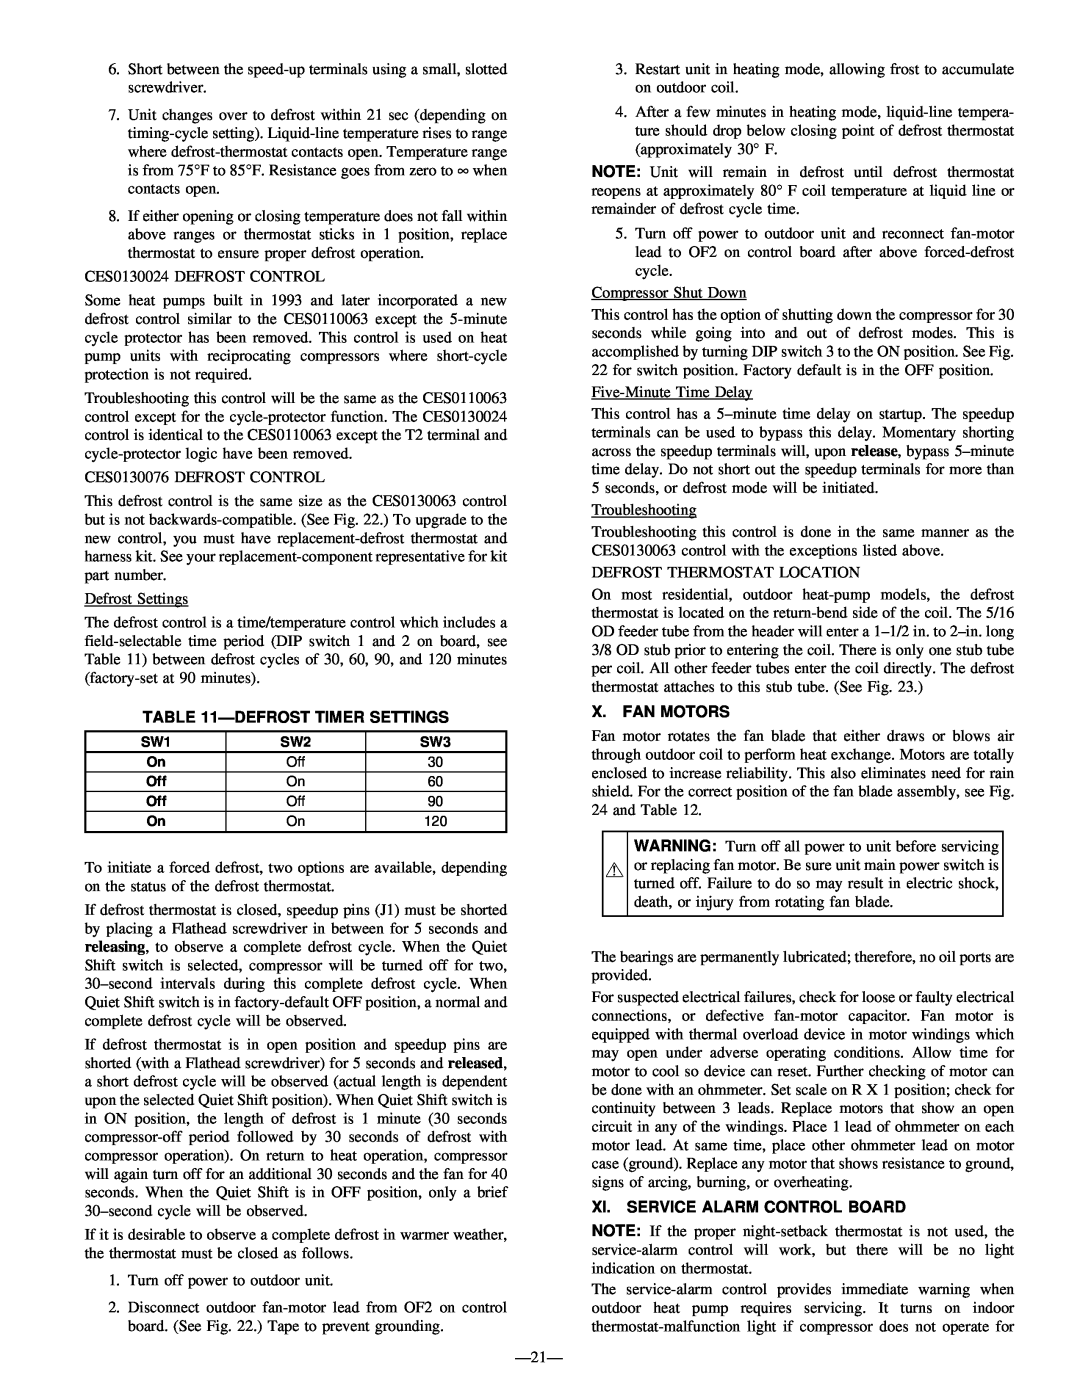 Bryant R-22 service manual Defrosttimer Settings, X. Fan Motors, Xi. Service Alarm Control Board 